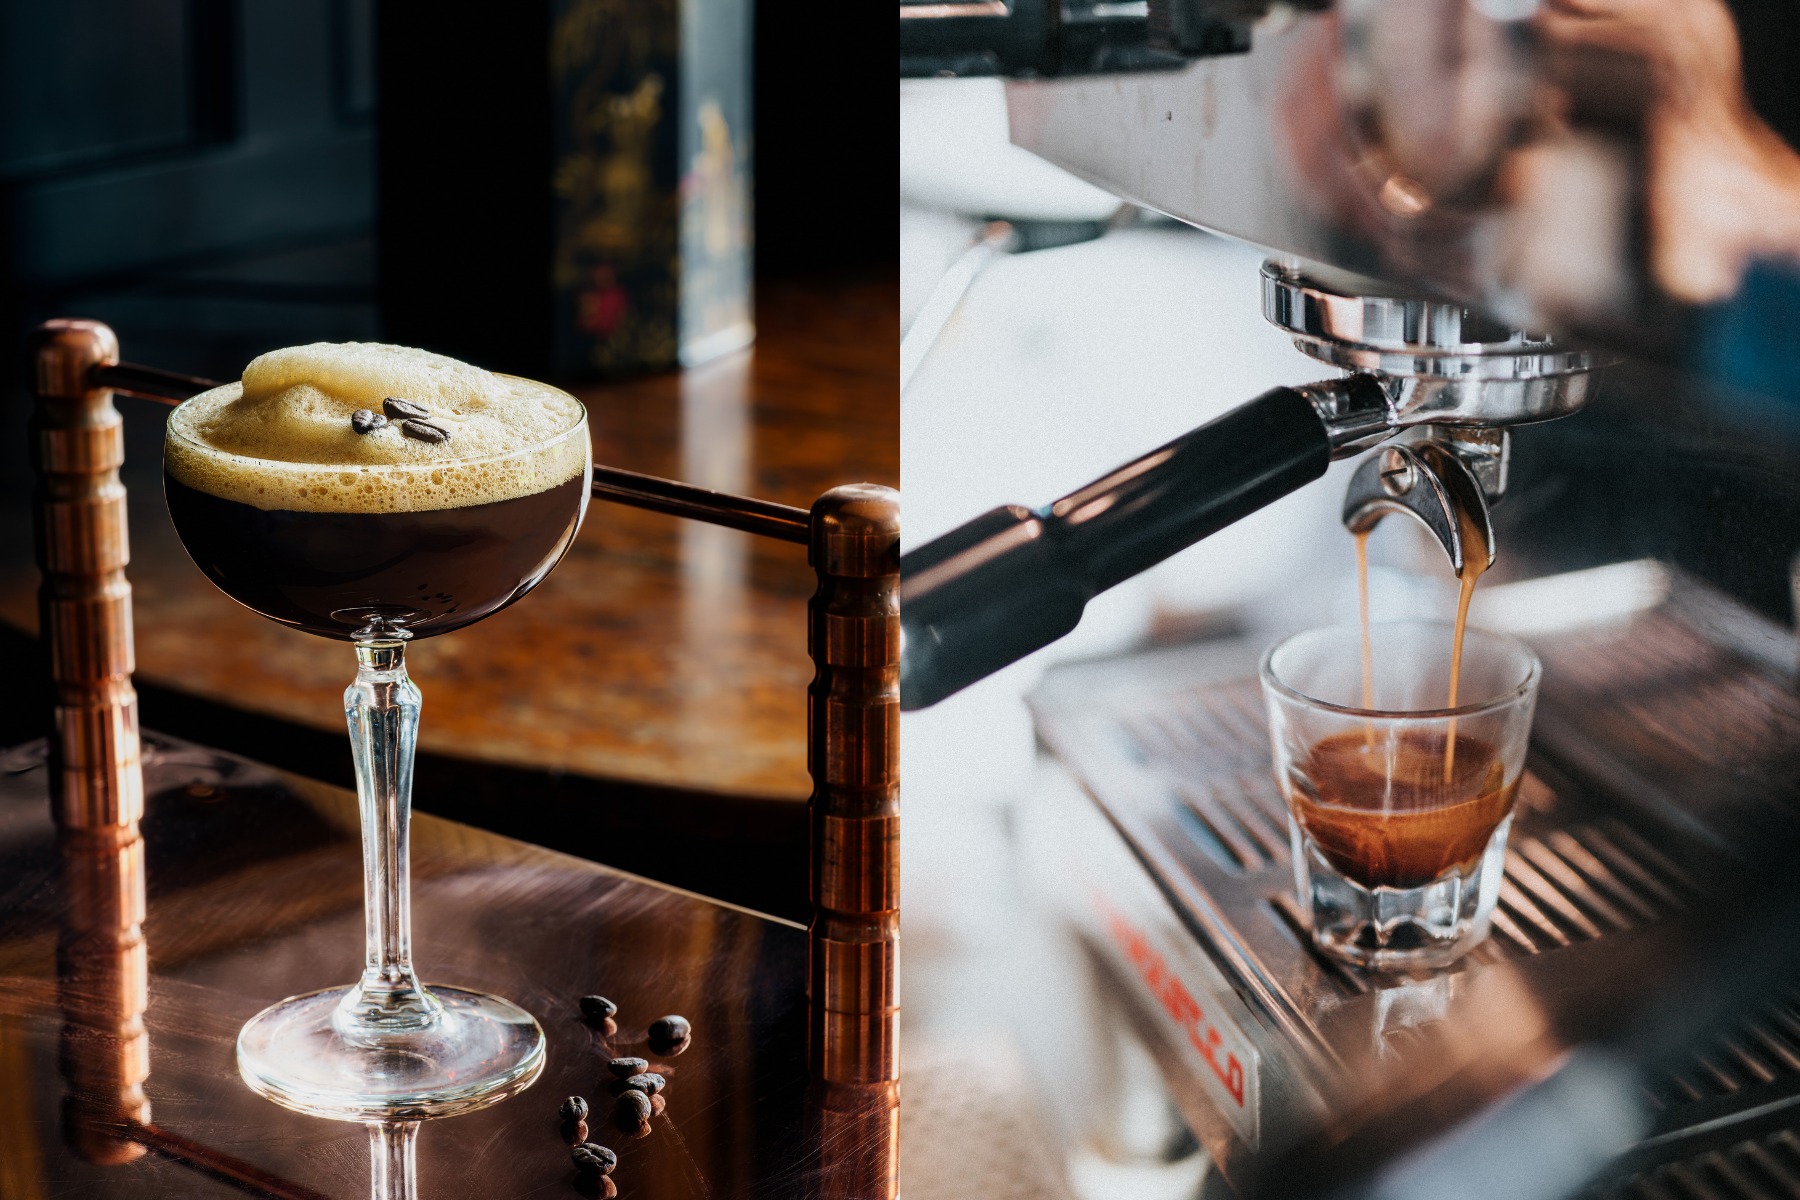 Parker Clay's Holiday Espresso Martini